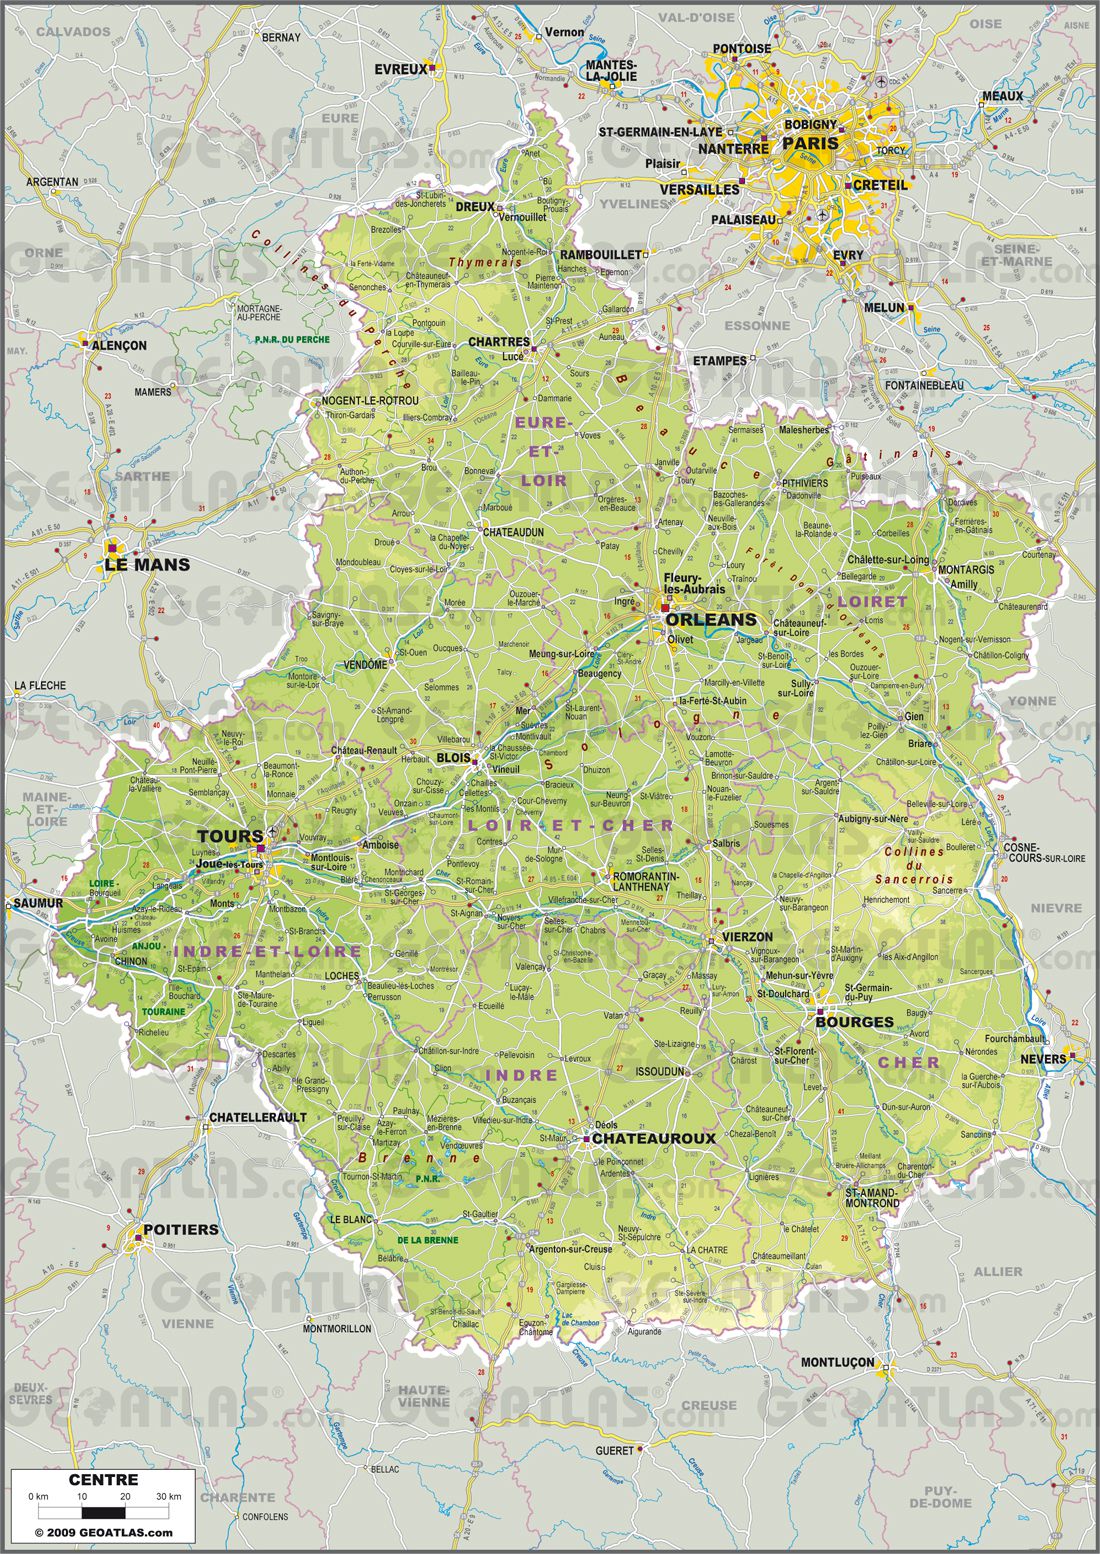 regions-centre-carte-detaillee